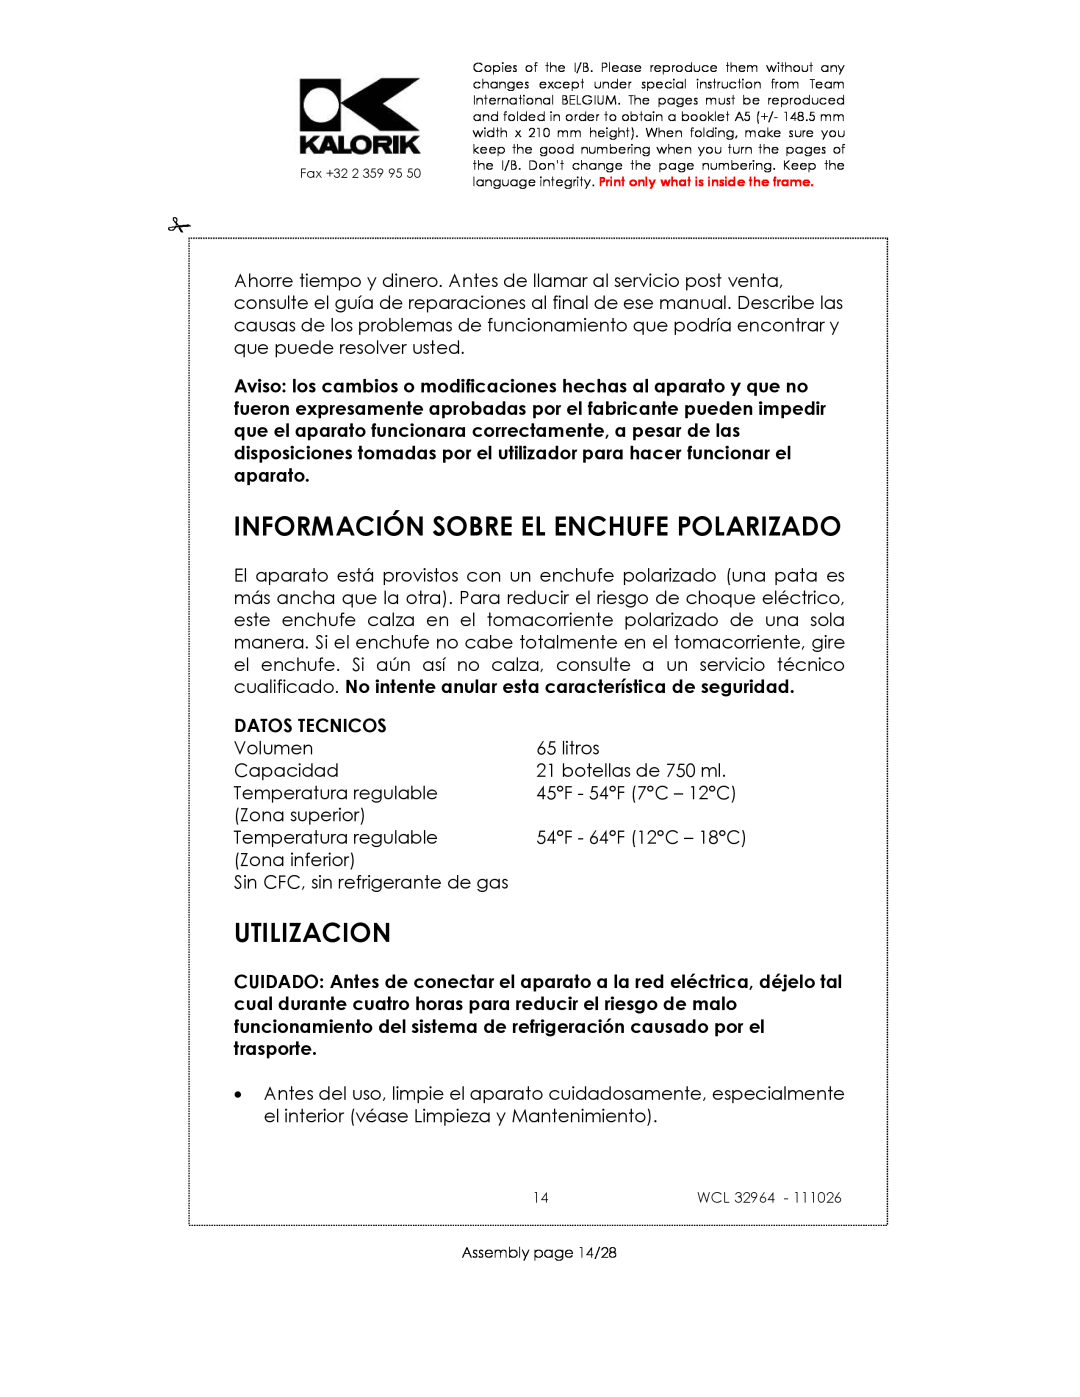 Kalorik USK WCL 32964 115V~130W manual Información Sobre El Enchufe Polarizado, Utilizacion, Datos Tecnicos 